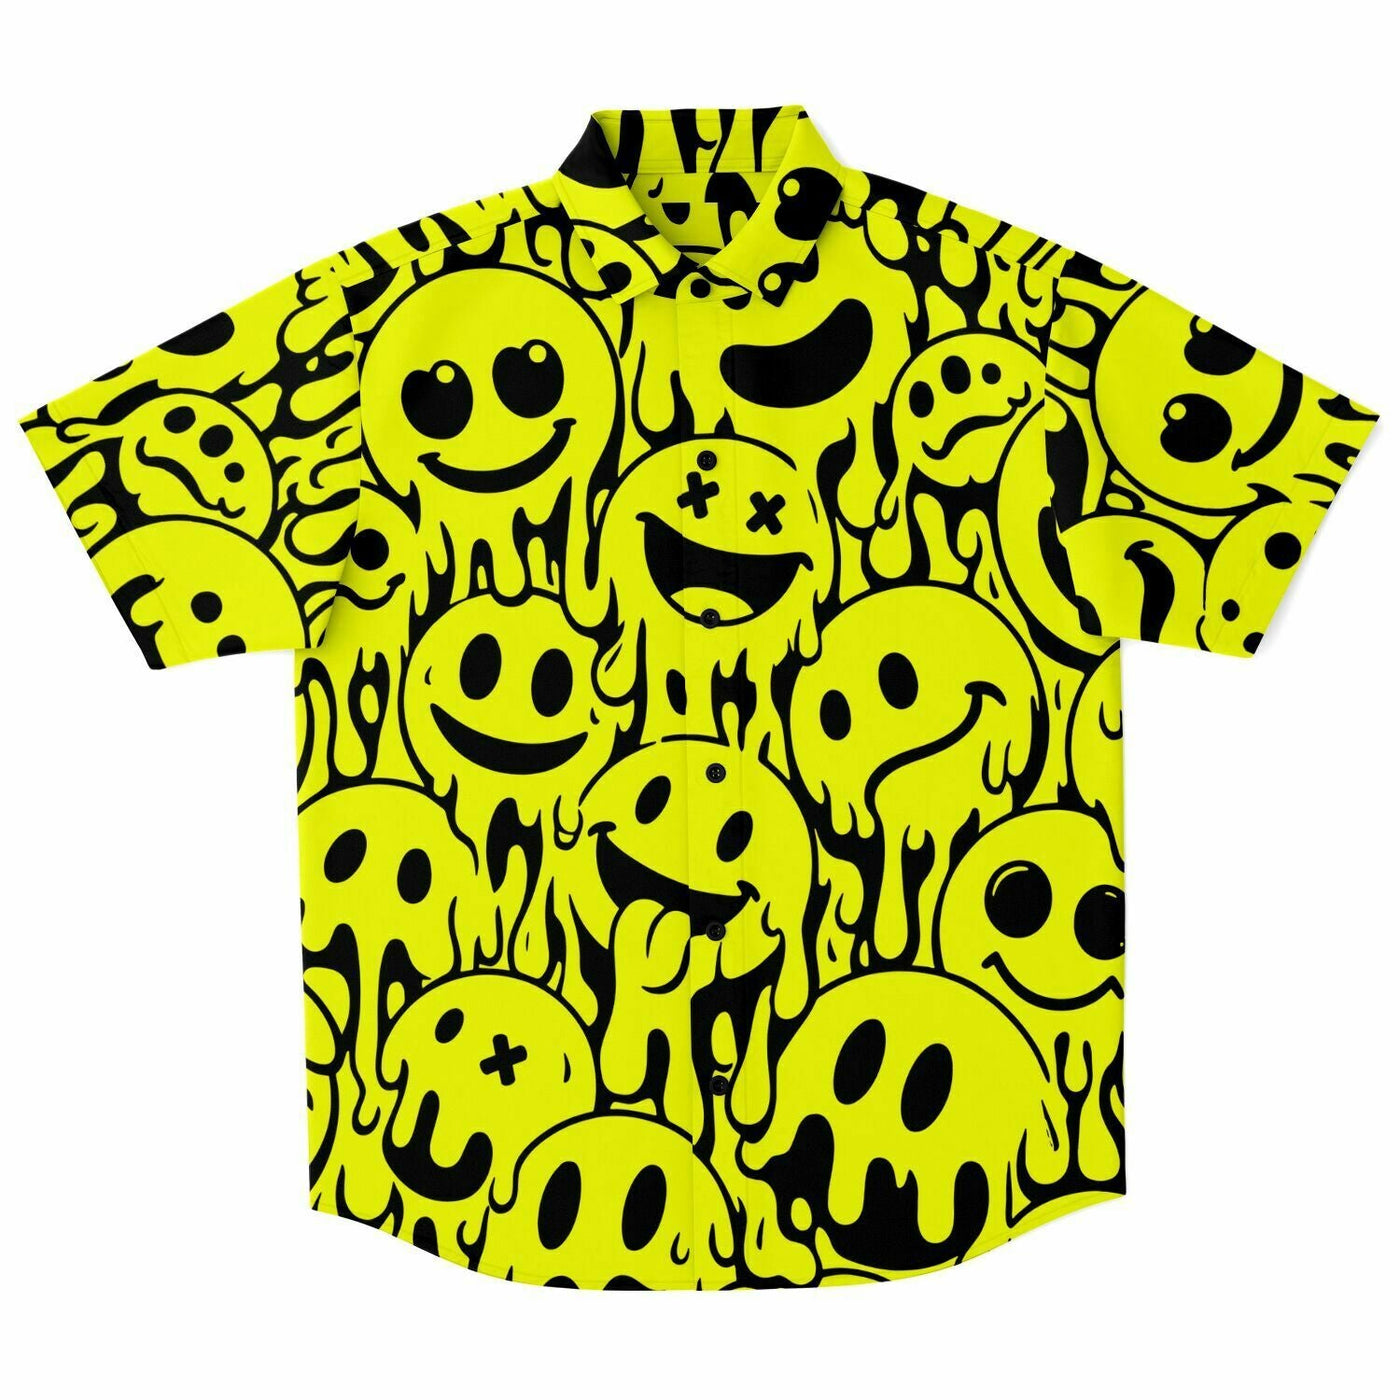 Acid House Melting Smiley Pattern Retro Pop Short Sleeve Shirt